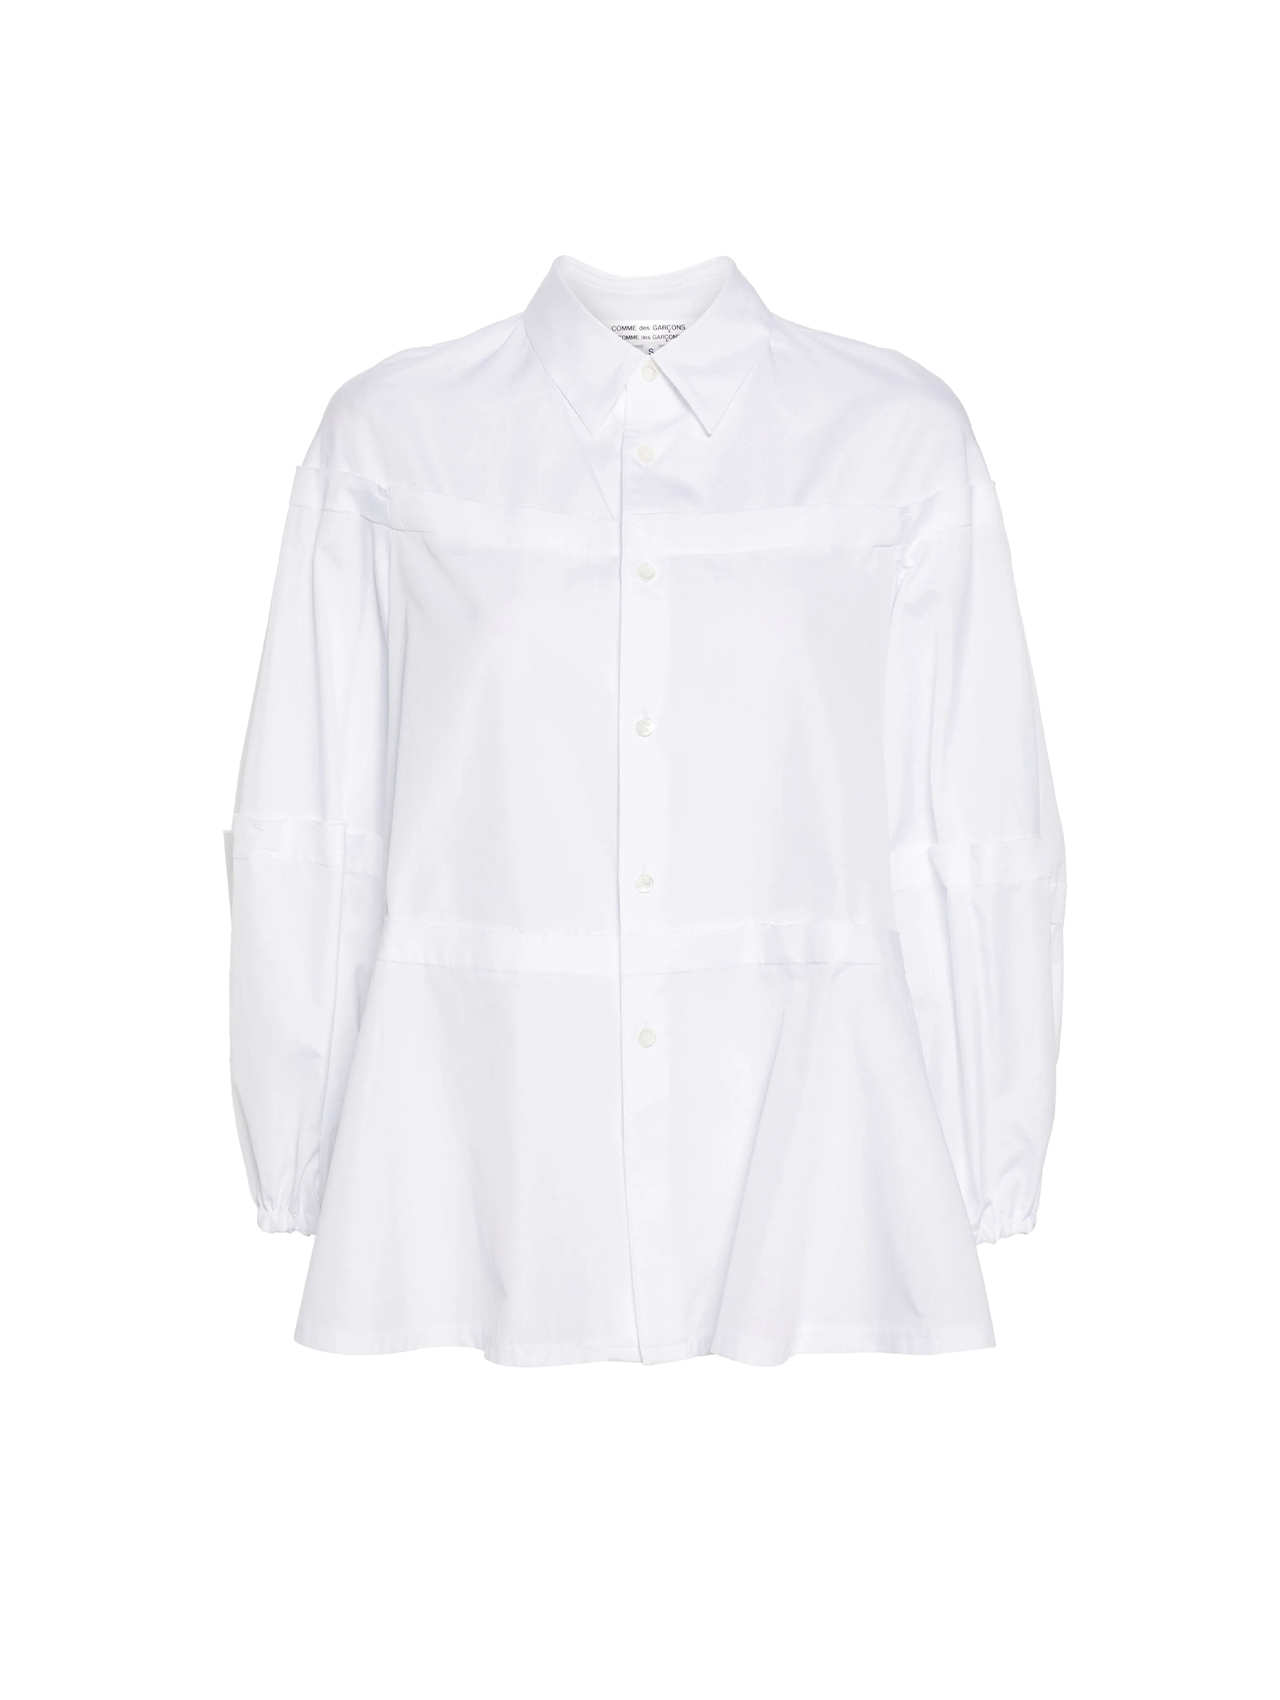 CDG CDG White Tiered Raw Cut Shirt